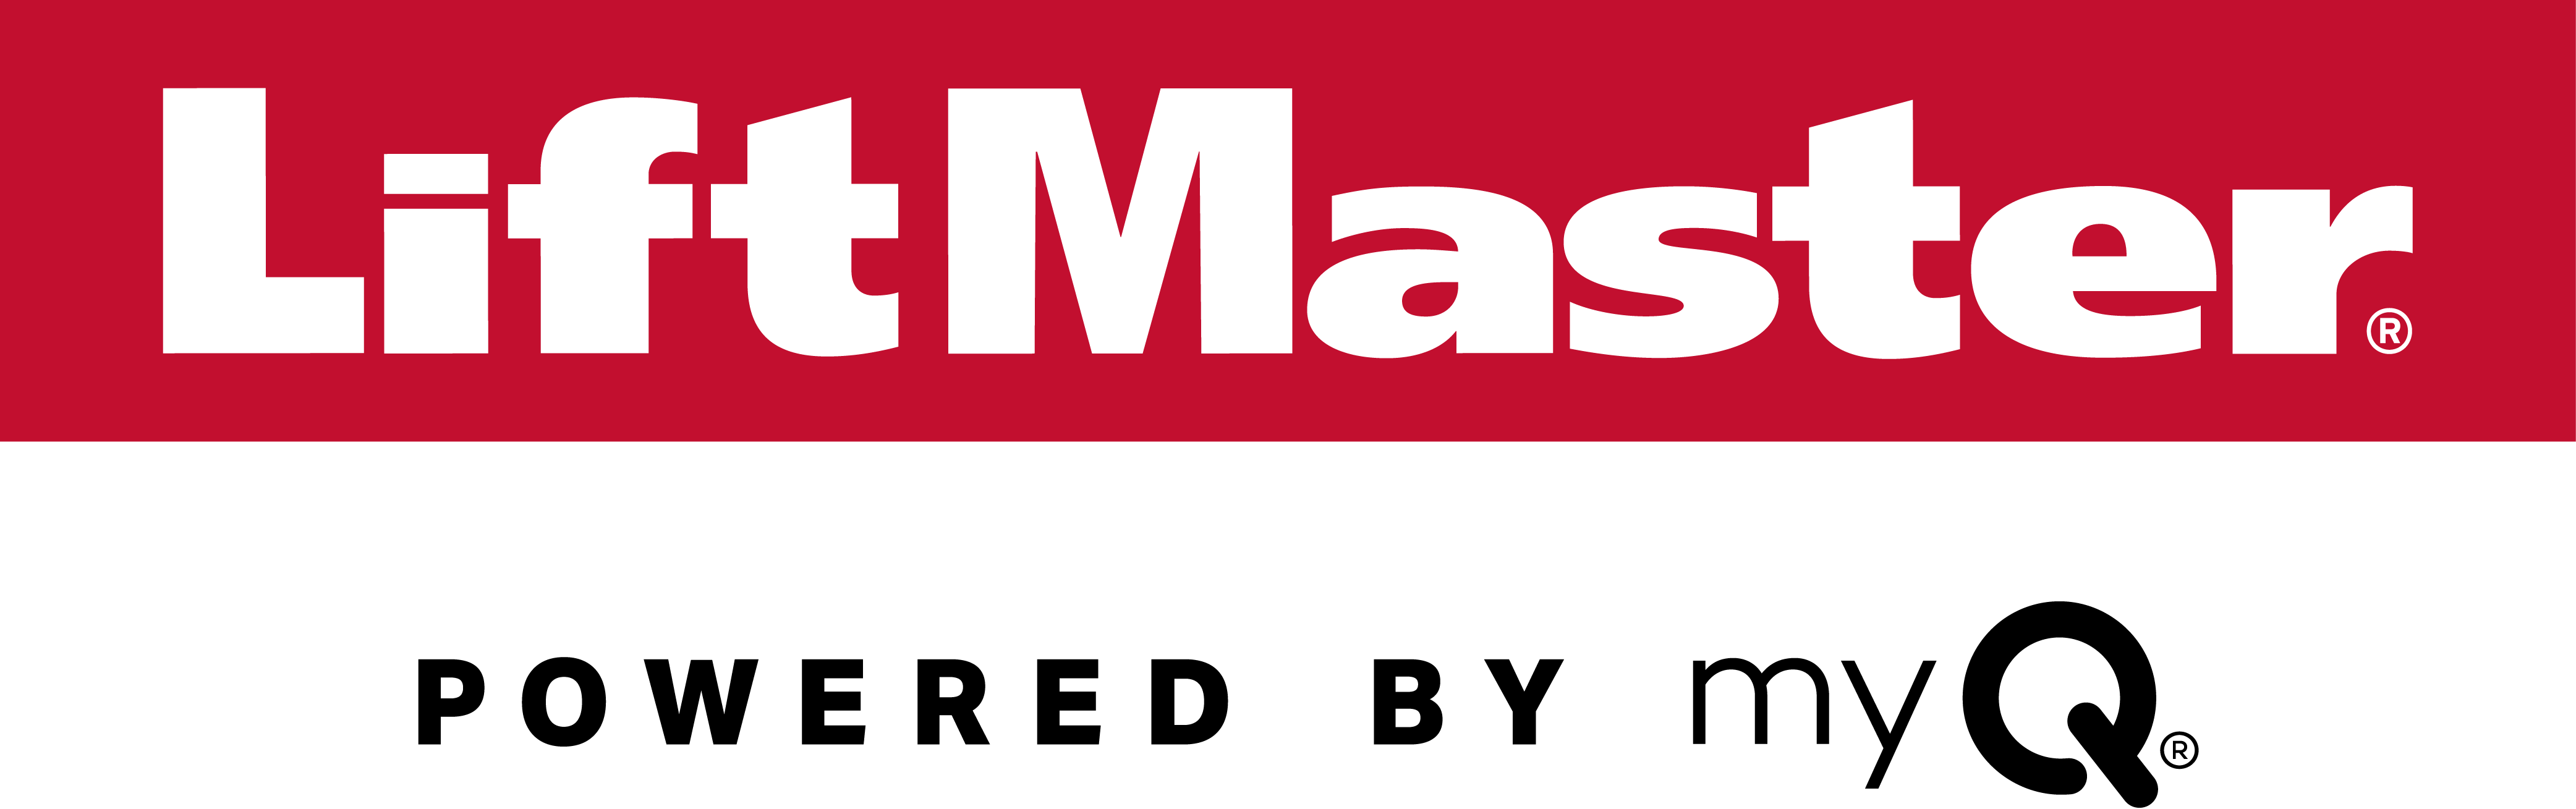 Chamberlain Group-LiftMaster logo